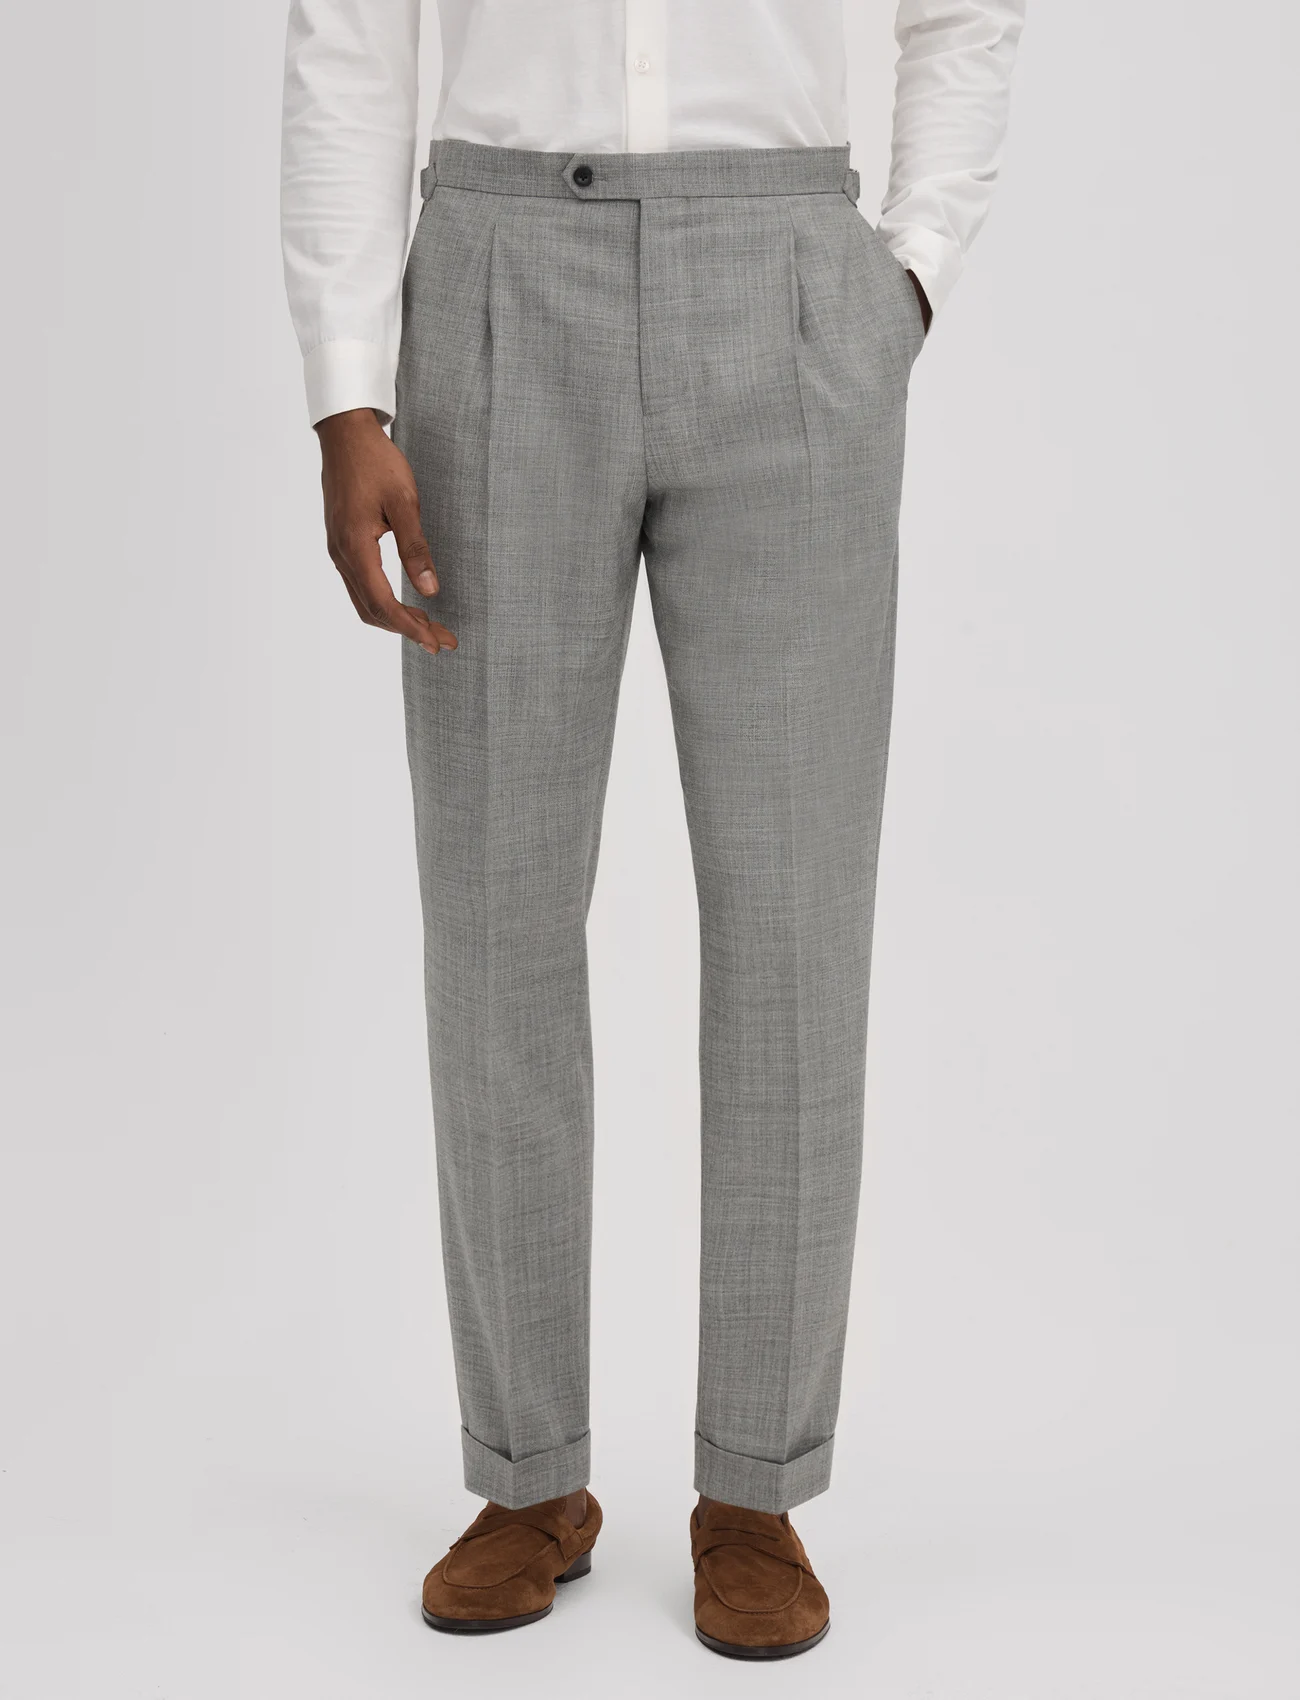 Reiss - VALENTINE T - pantalons - soft grey - 0